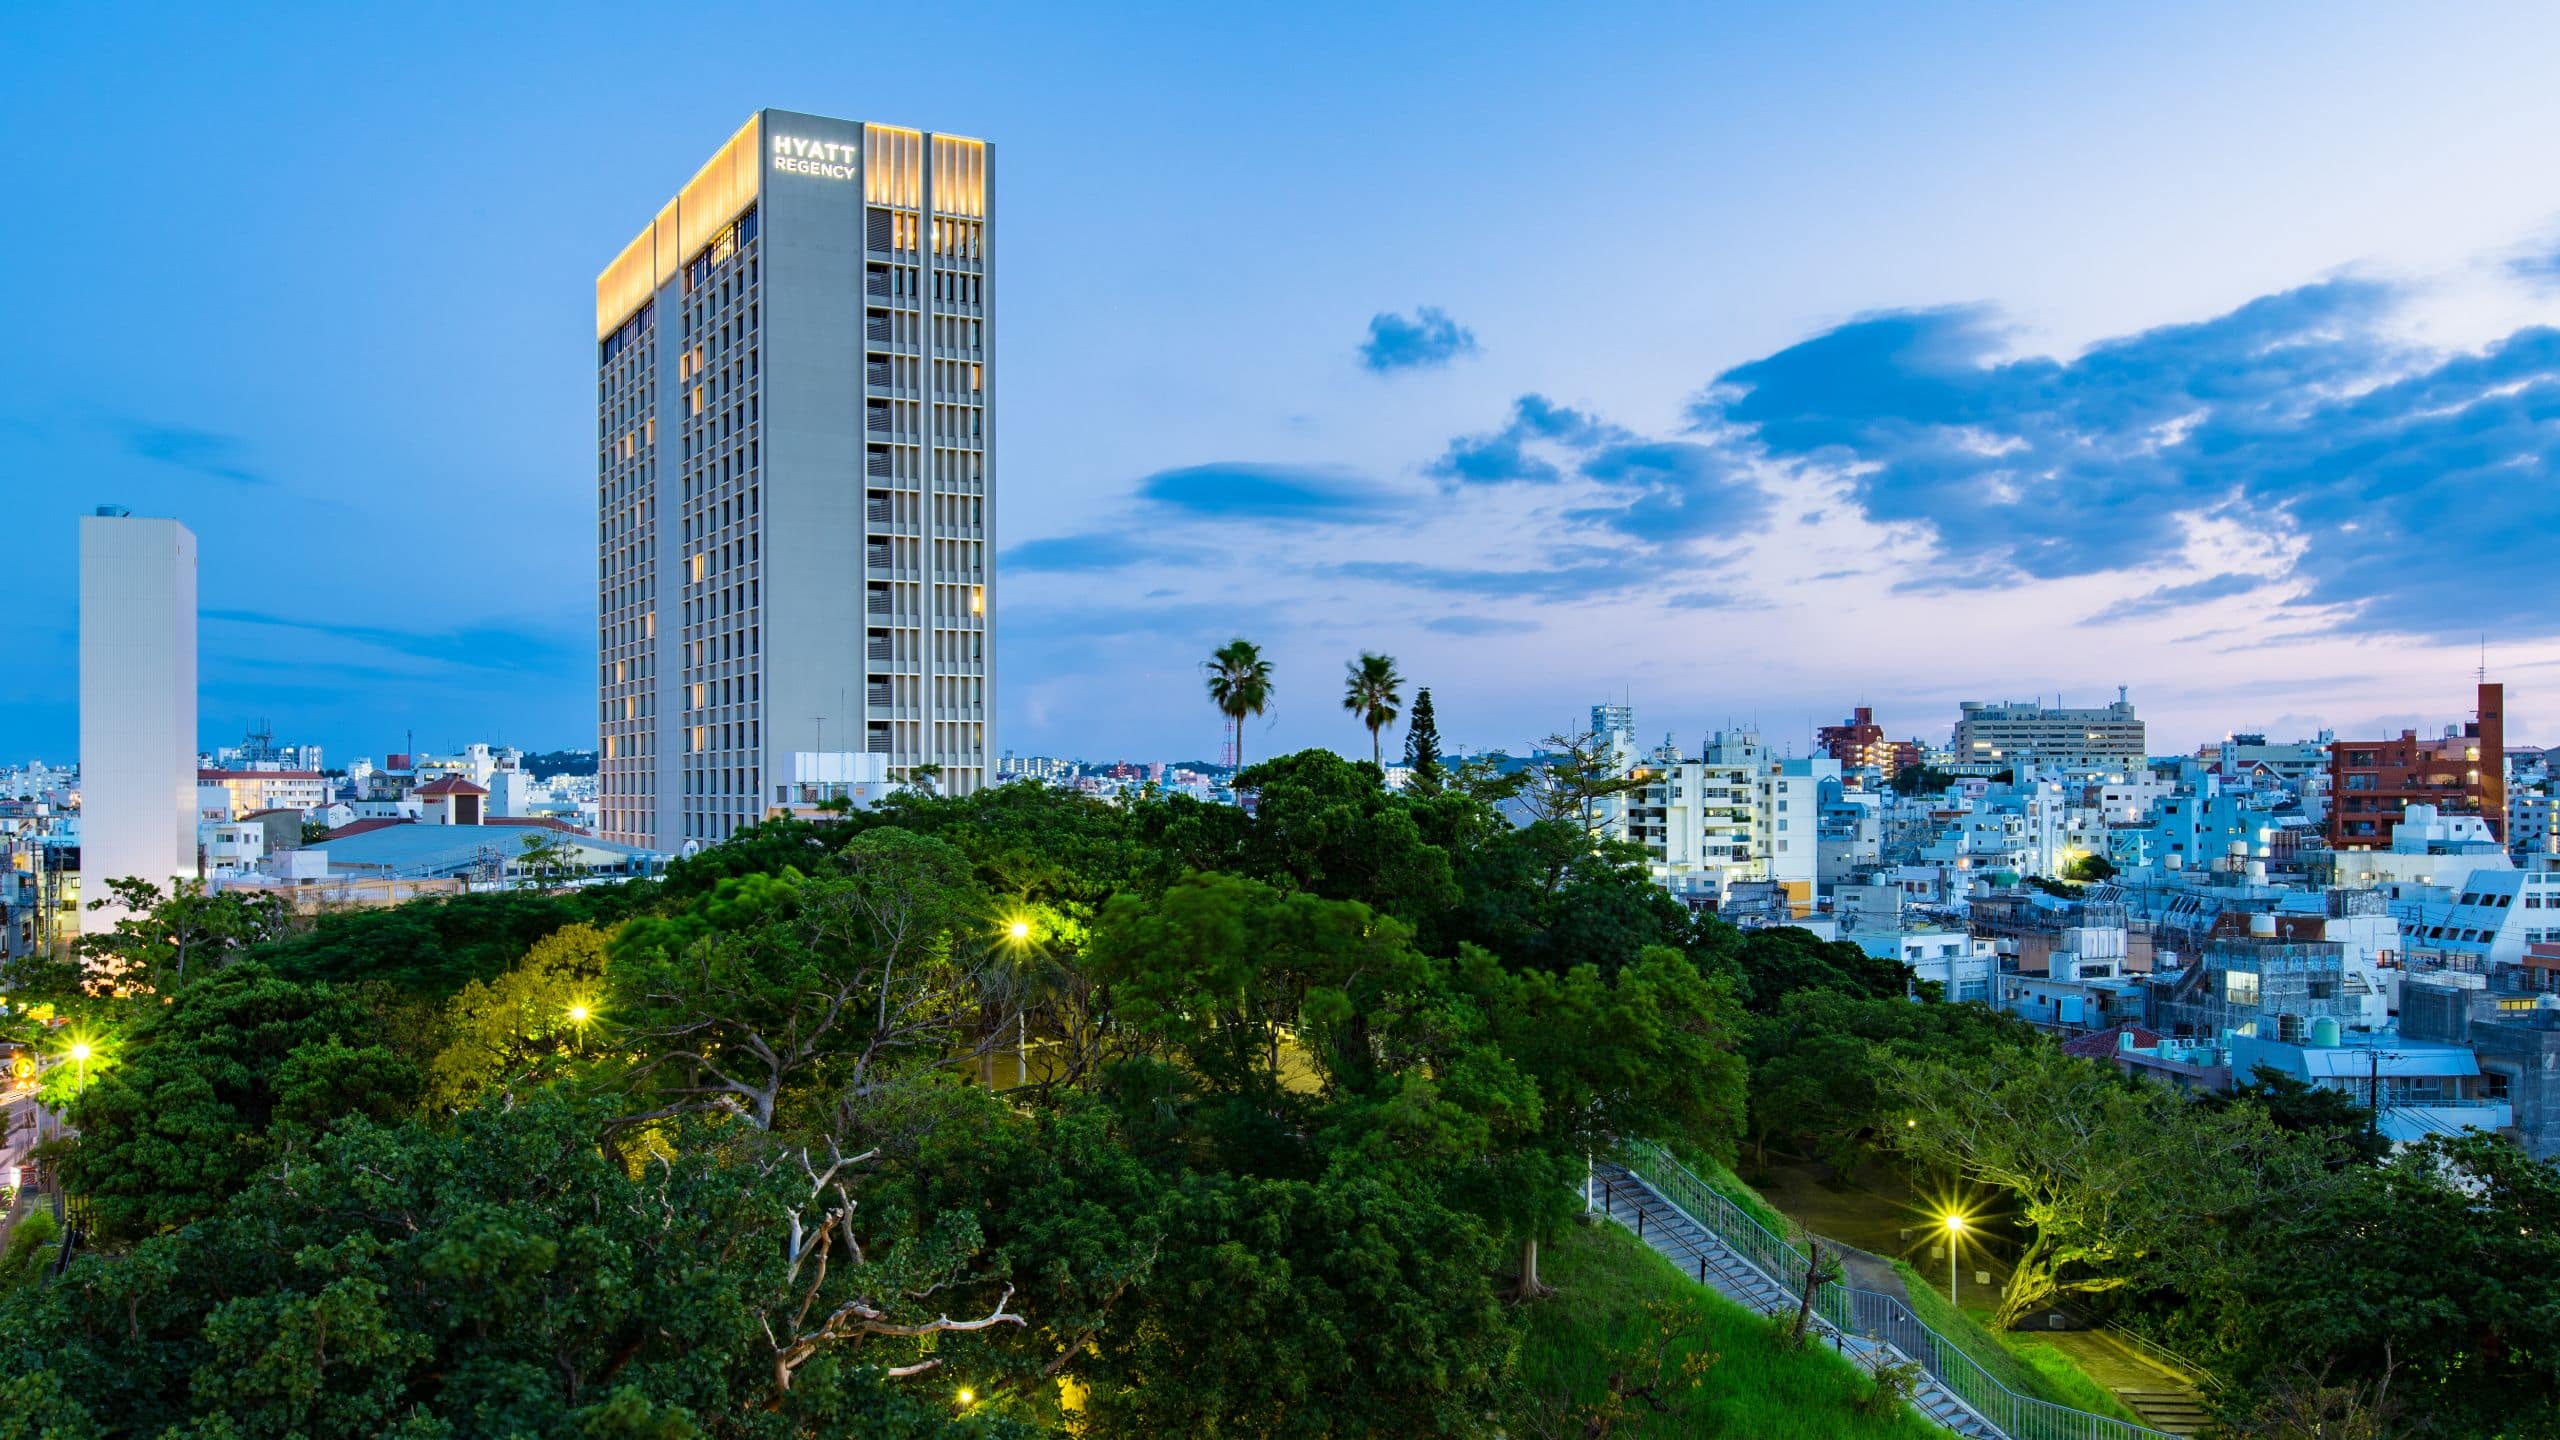 Hyatt Regency Naha, Okinawa Hotel Exterior From Kibo Ga Oka Park